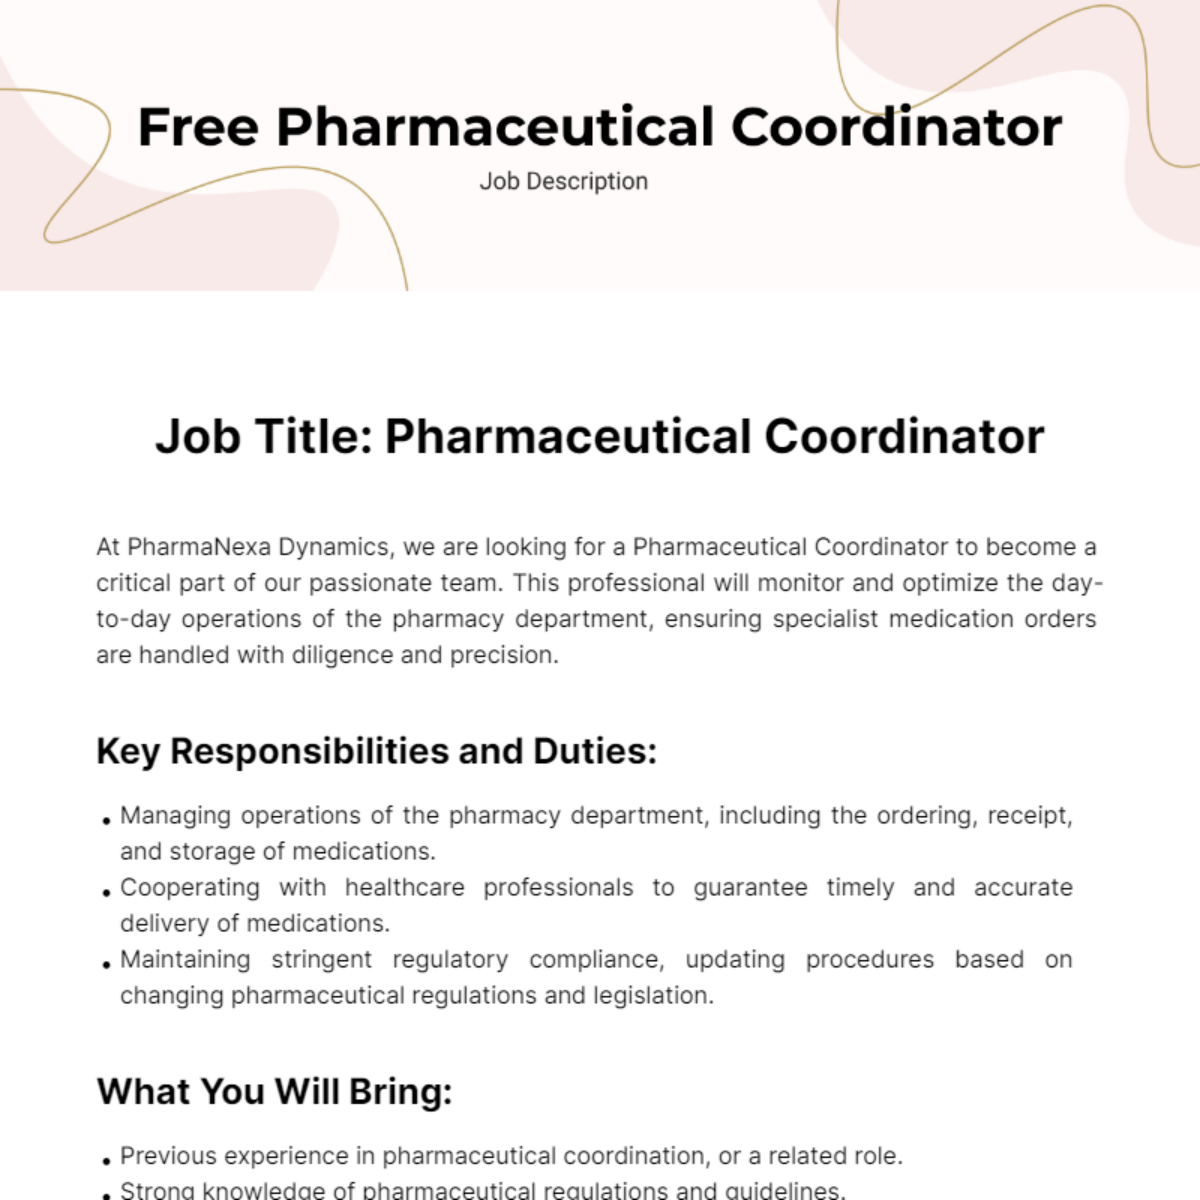 Free Pharmaceutical Coordinator Job Description Template